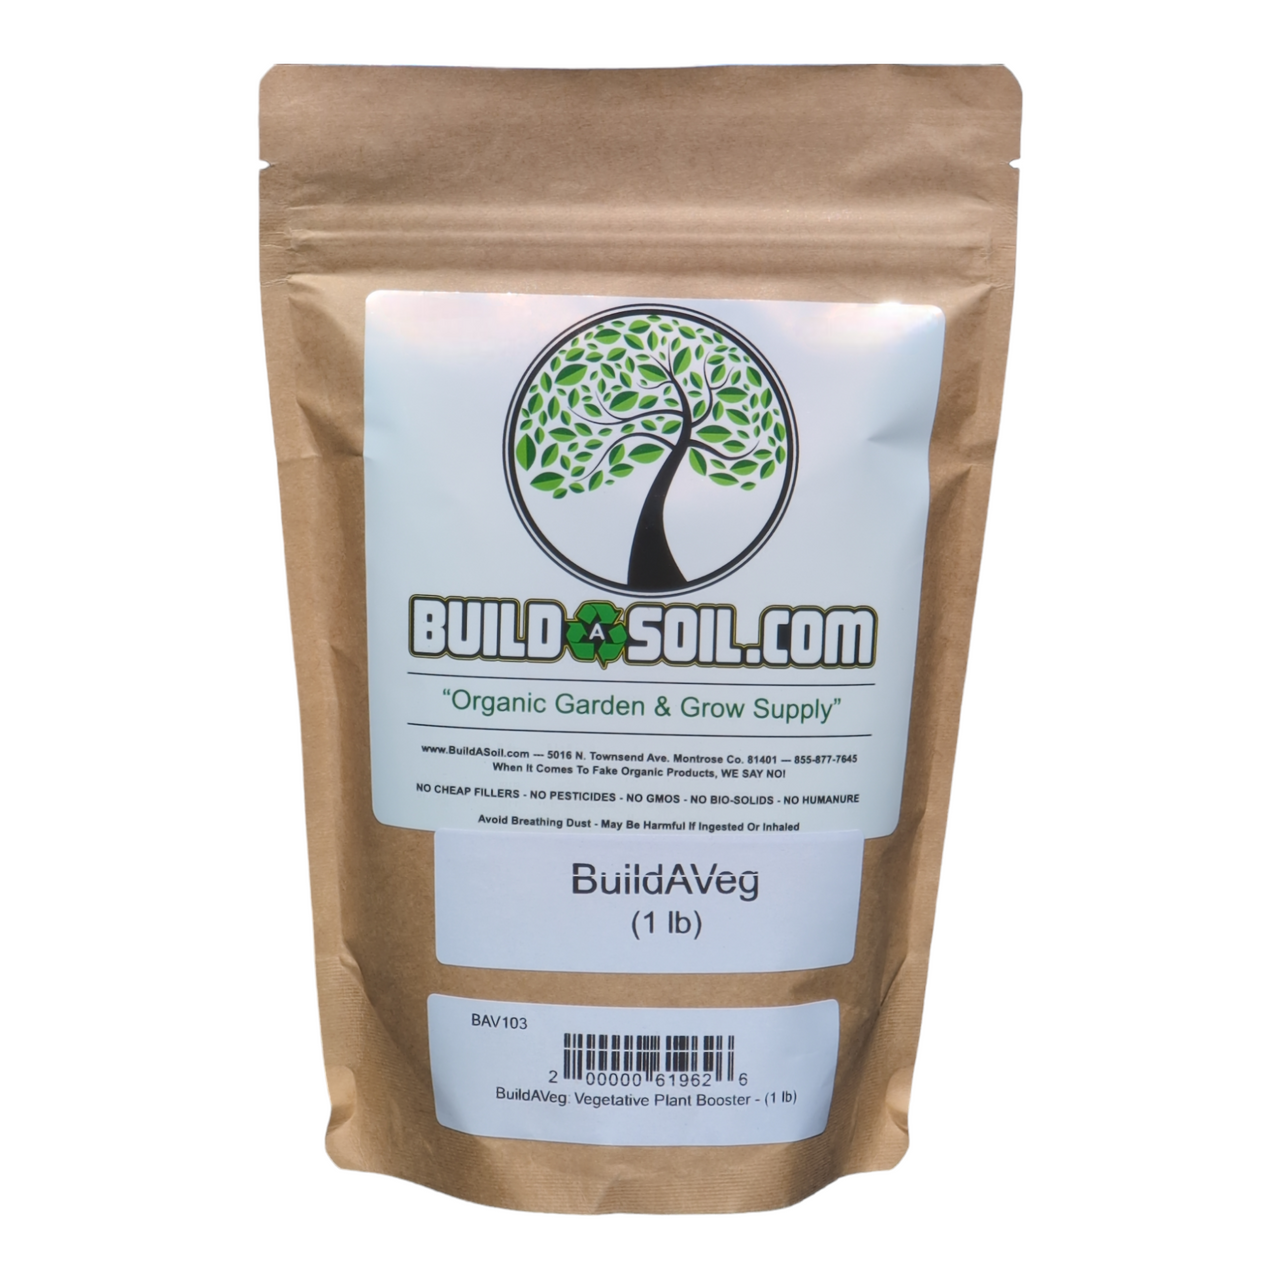 BuildAVeg: Vegetative Plant Booster by BuildASoil